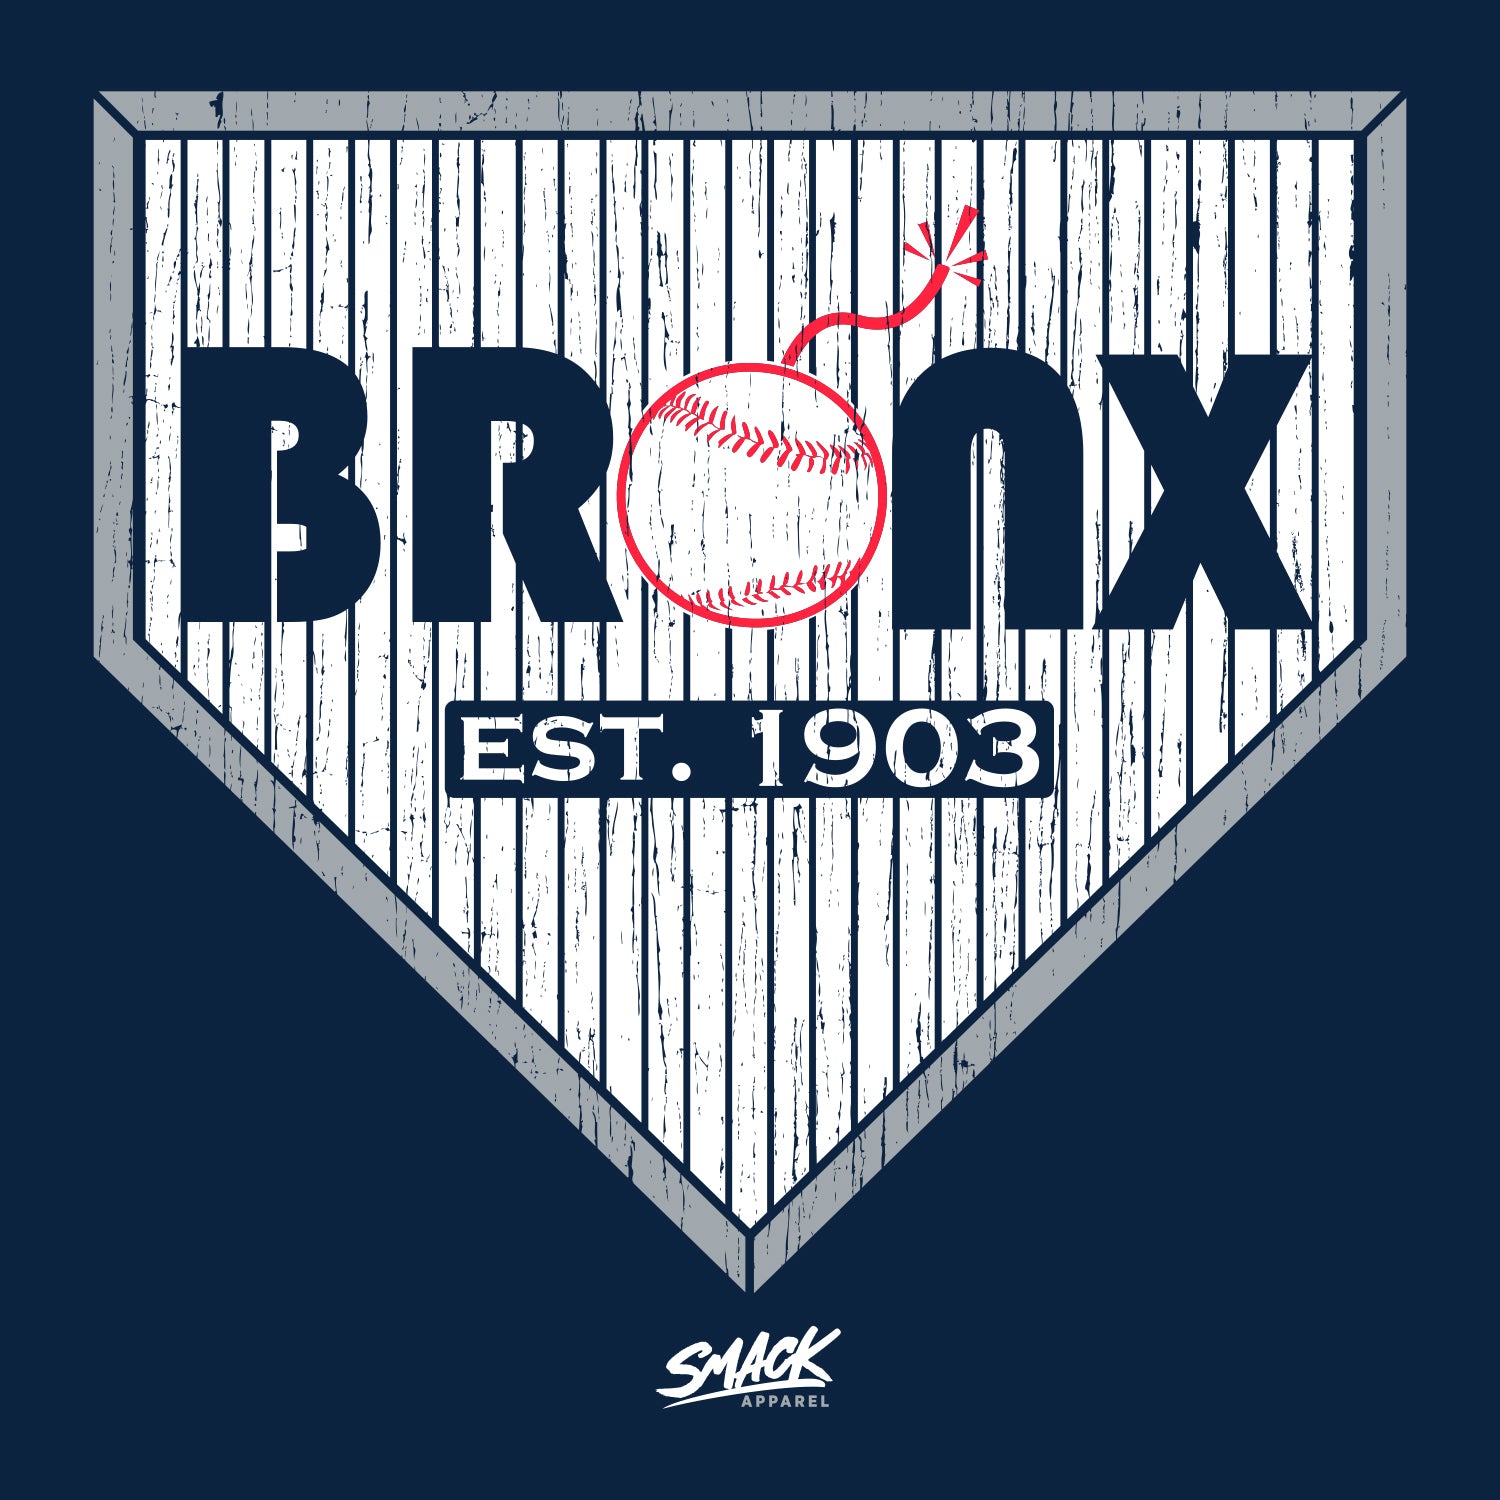 BRONX NEW YORK Baseball Murderers Row Baseball Tshirt Tee $19.95